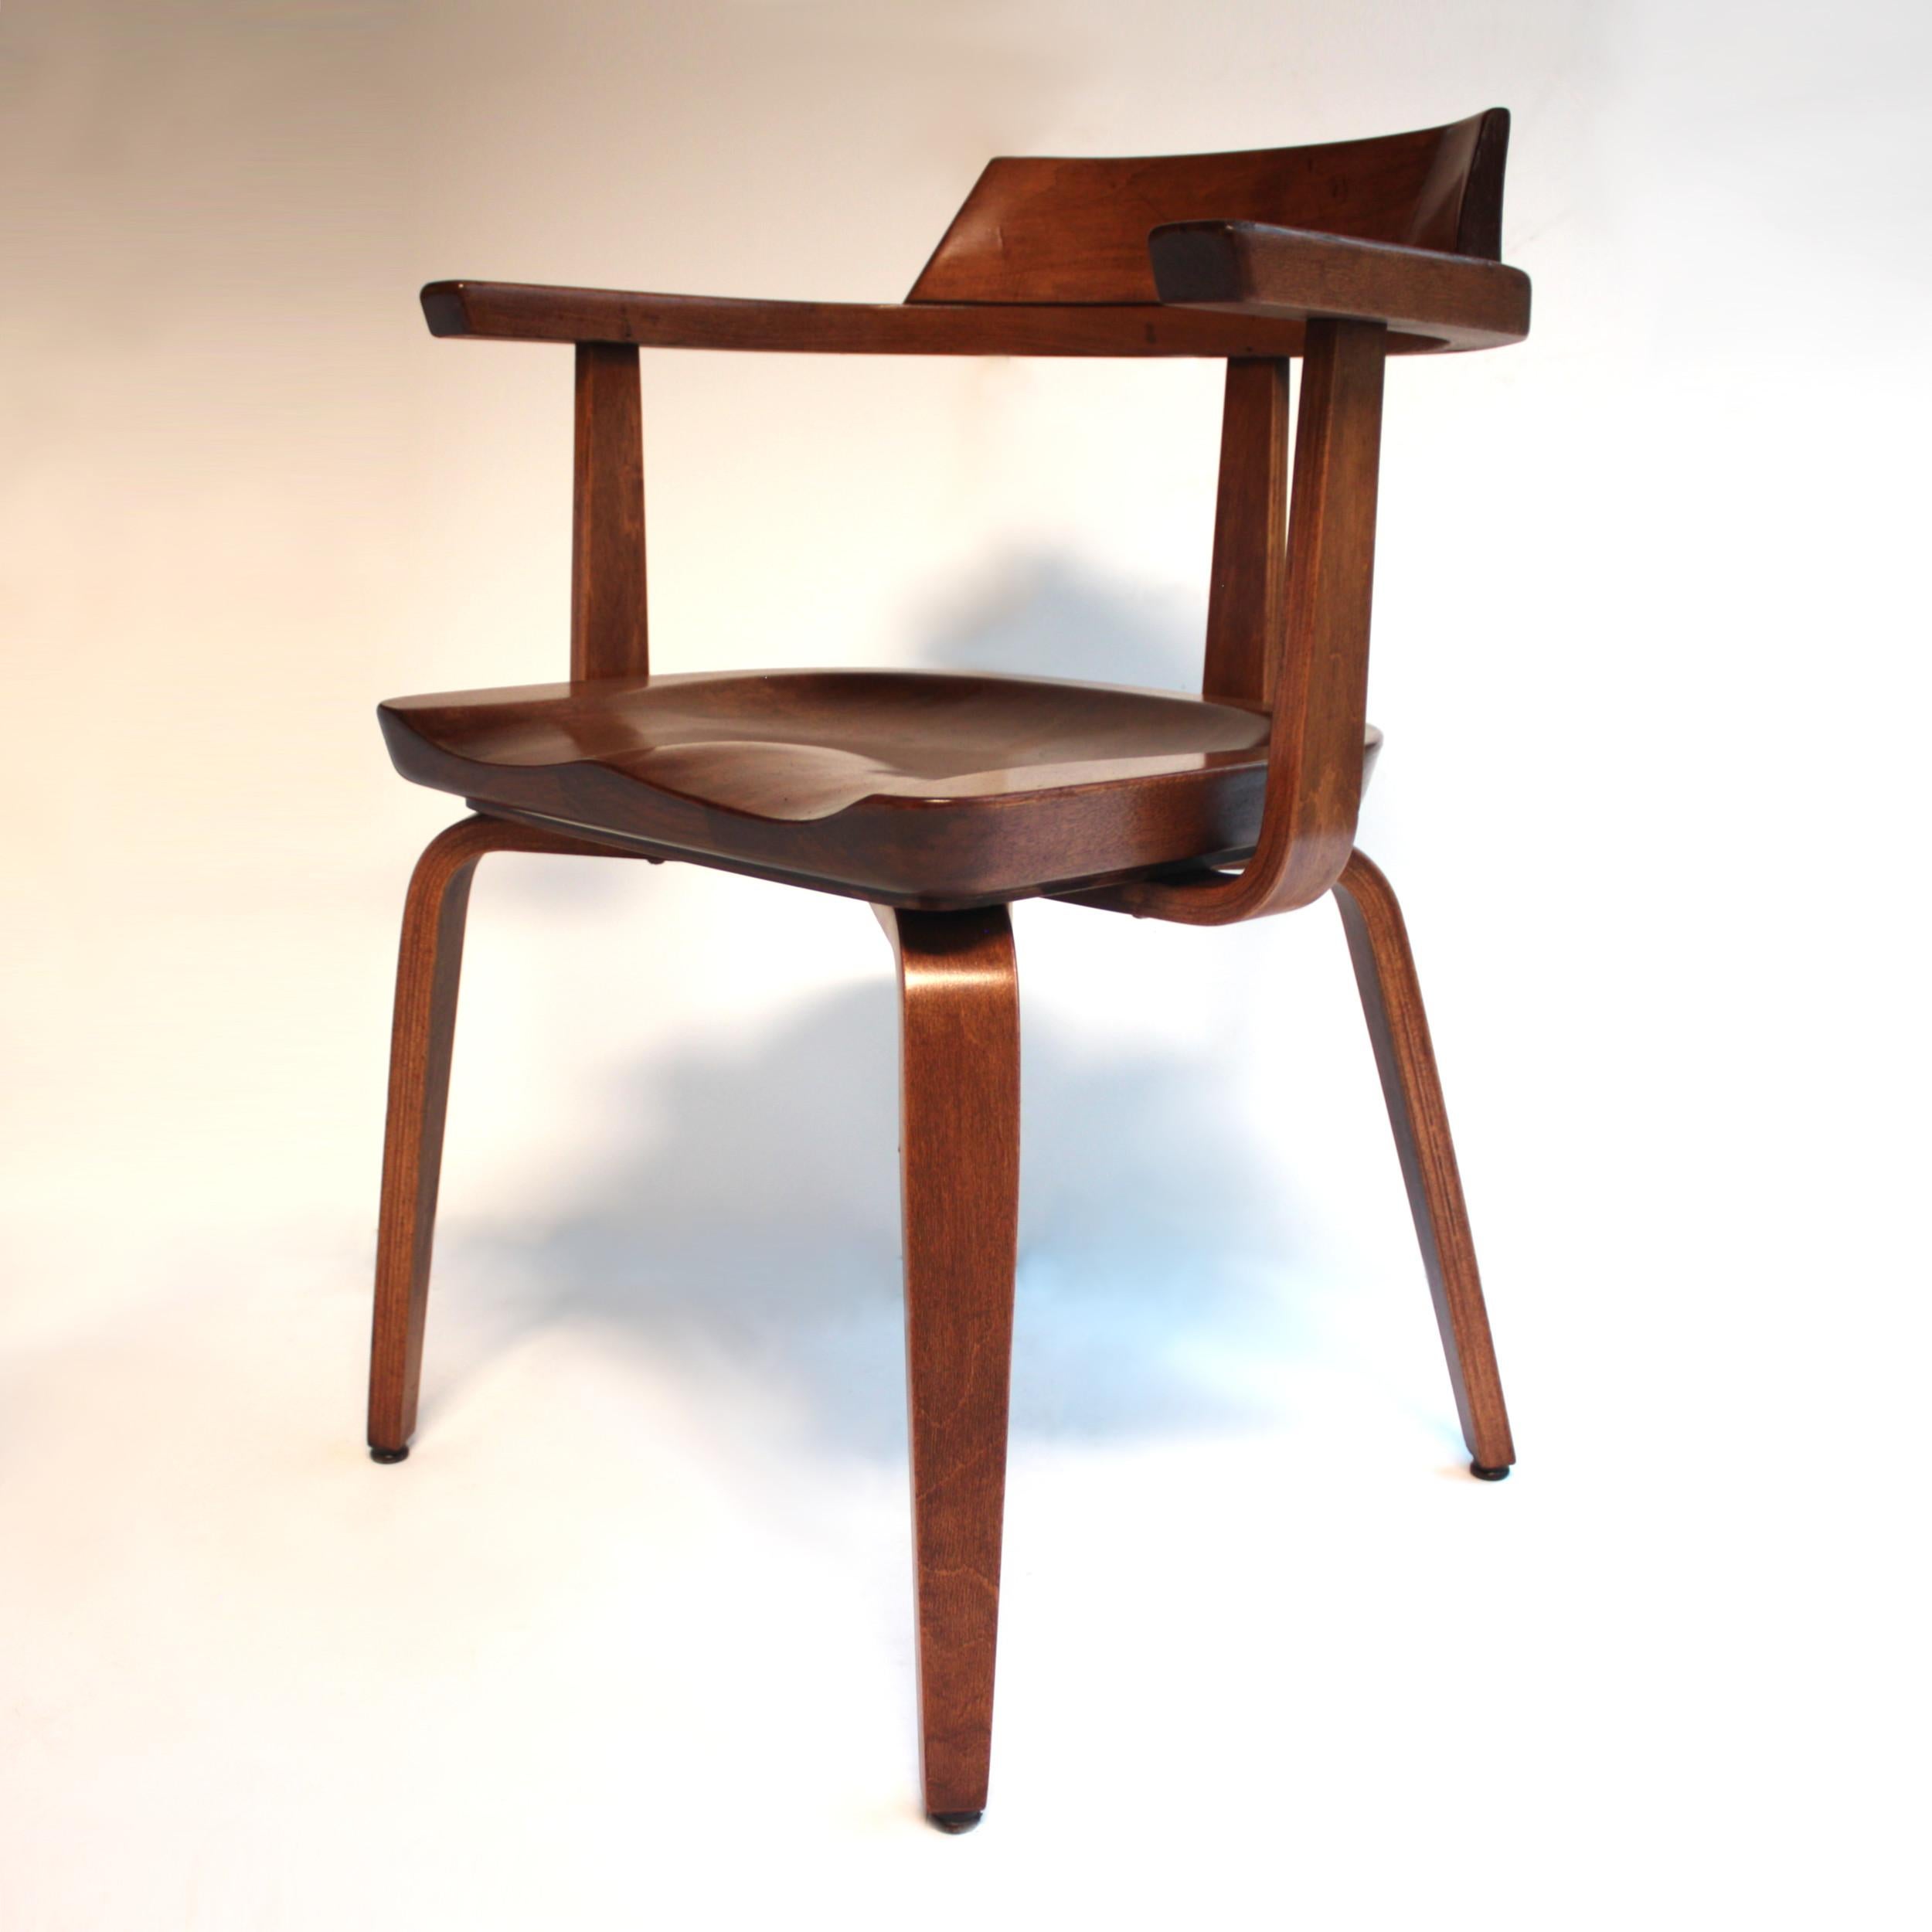 American Mid-Century Modern W199 Bent-Wood Chairs by Walter Gropius for Thonet Bauhaus